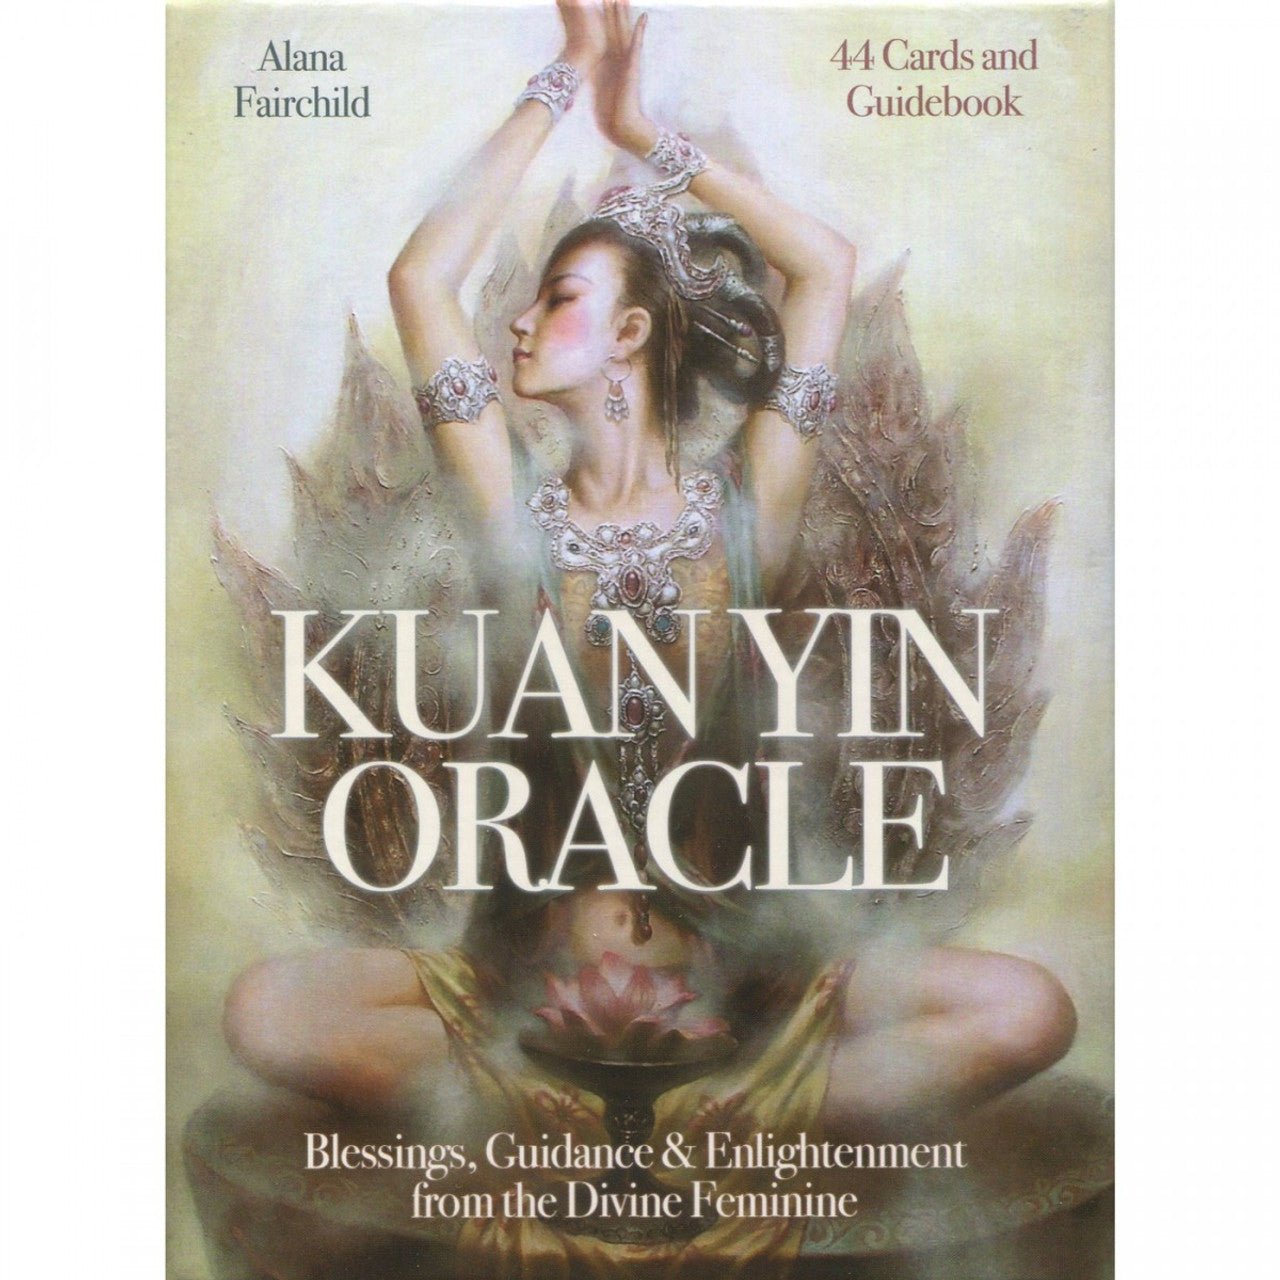 Kuan Yin Oracle - Alana Fairchild - The Hare and the Moon